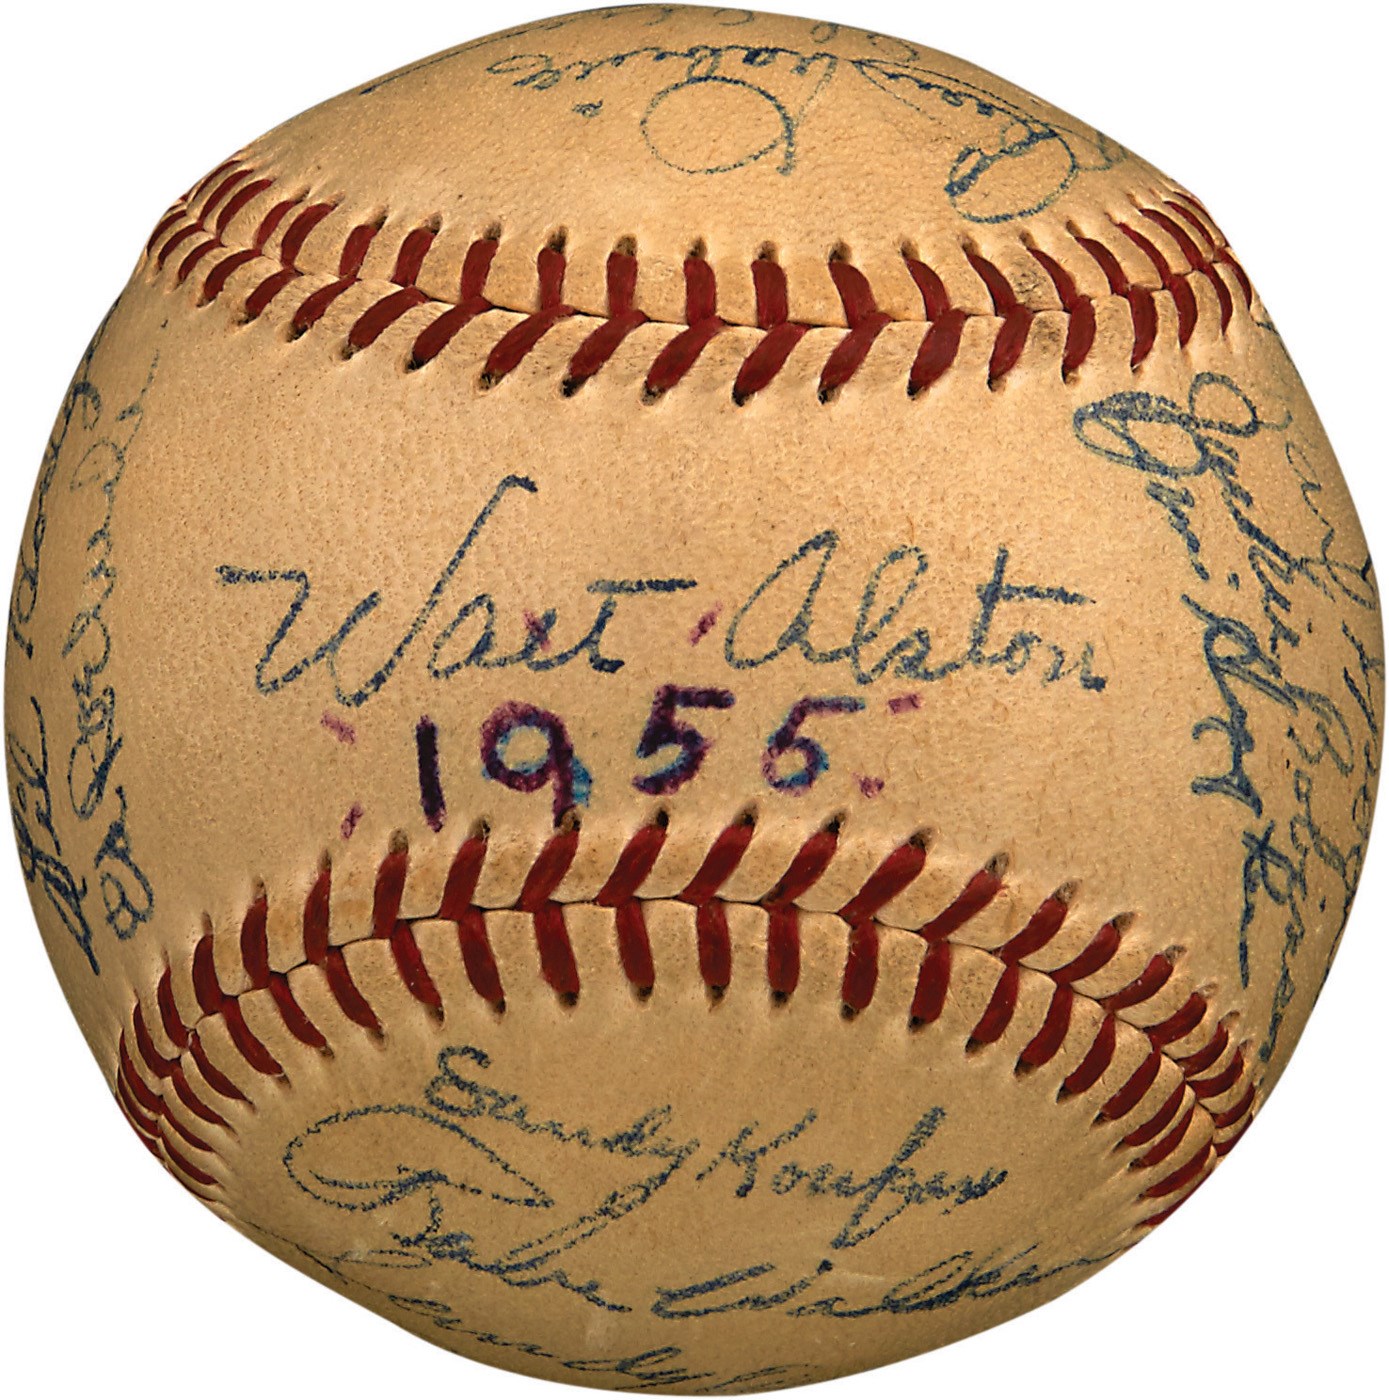 - Beautiful 1955 Brooklyn Dodgers Team-Signed Baseball (PSA)